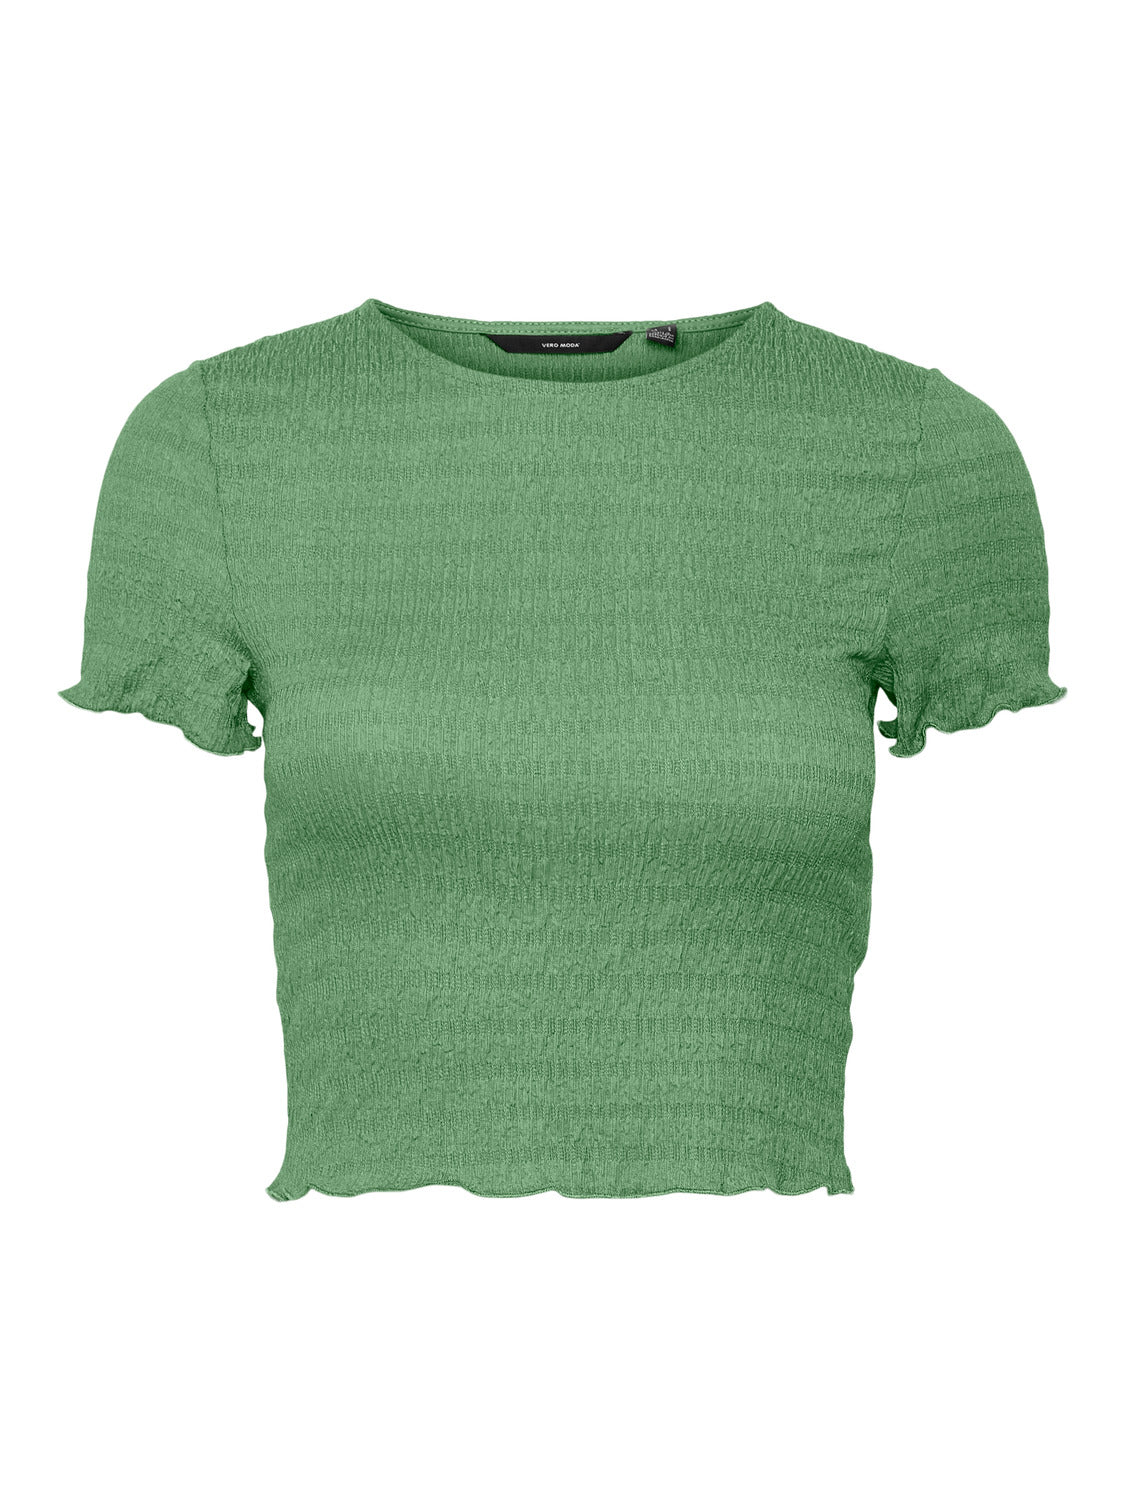 VMNYNNE T-Shirts & Tops - Aspen Green